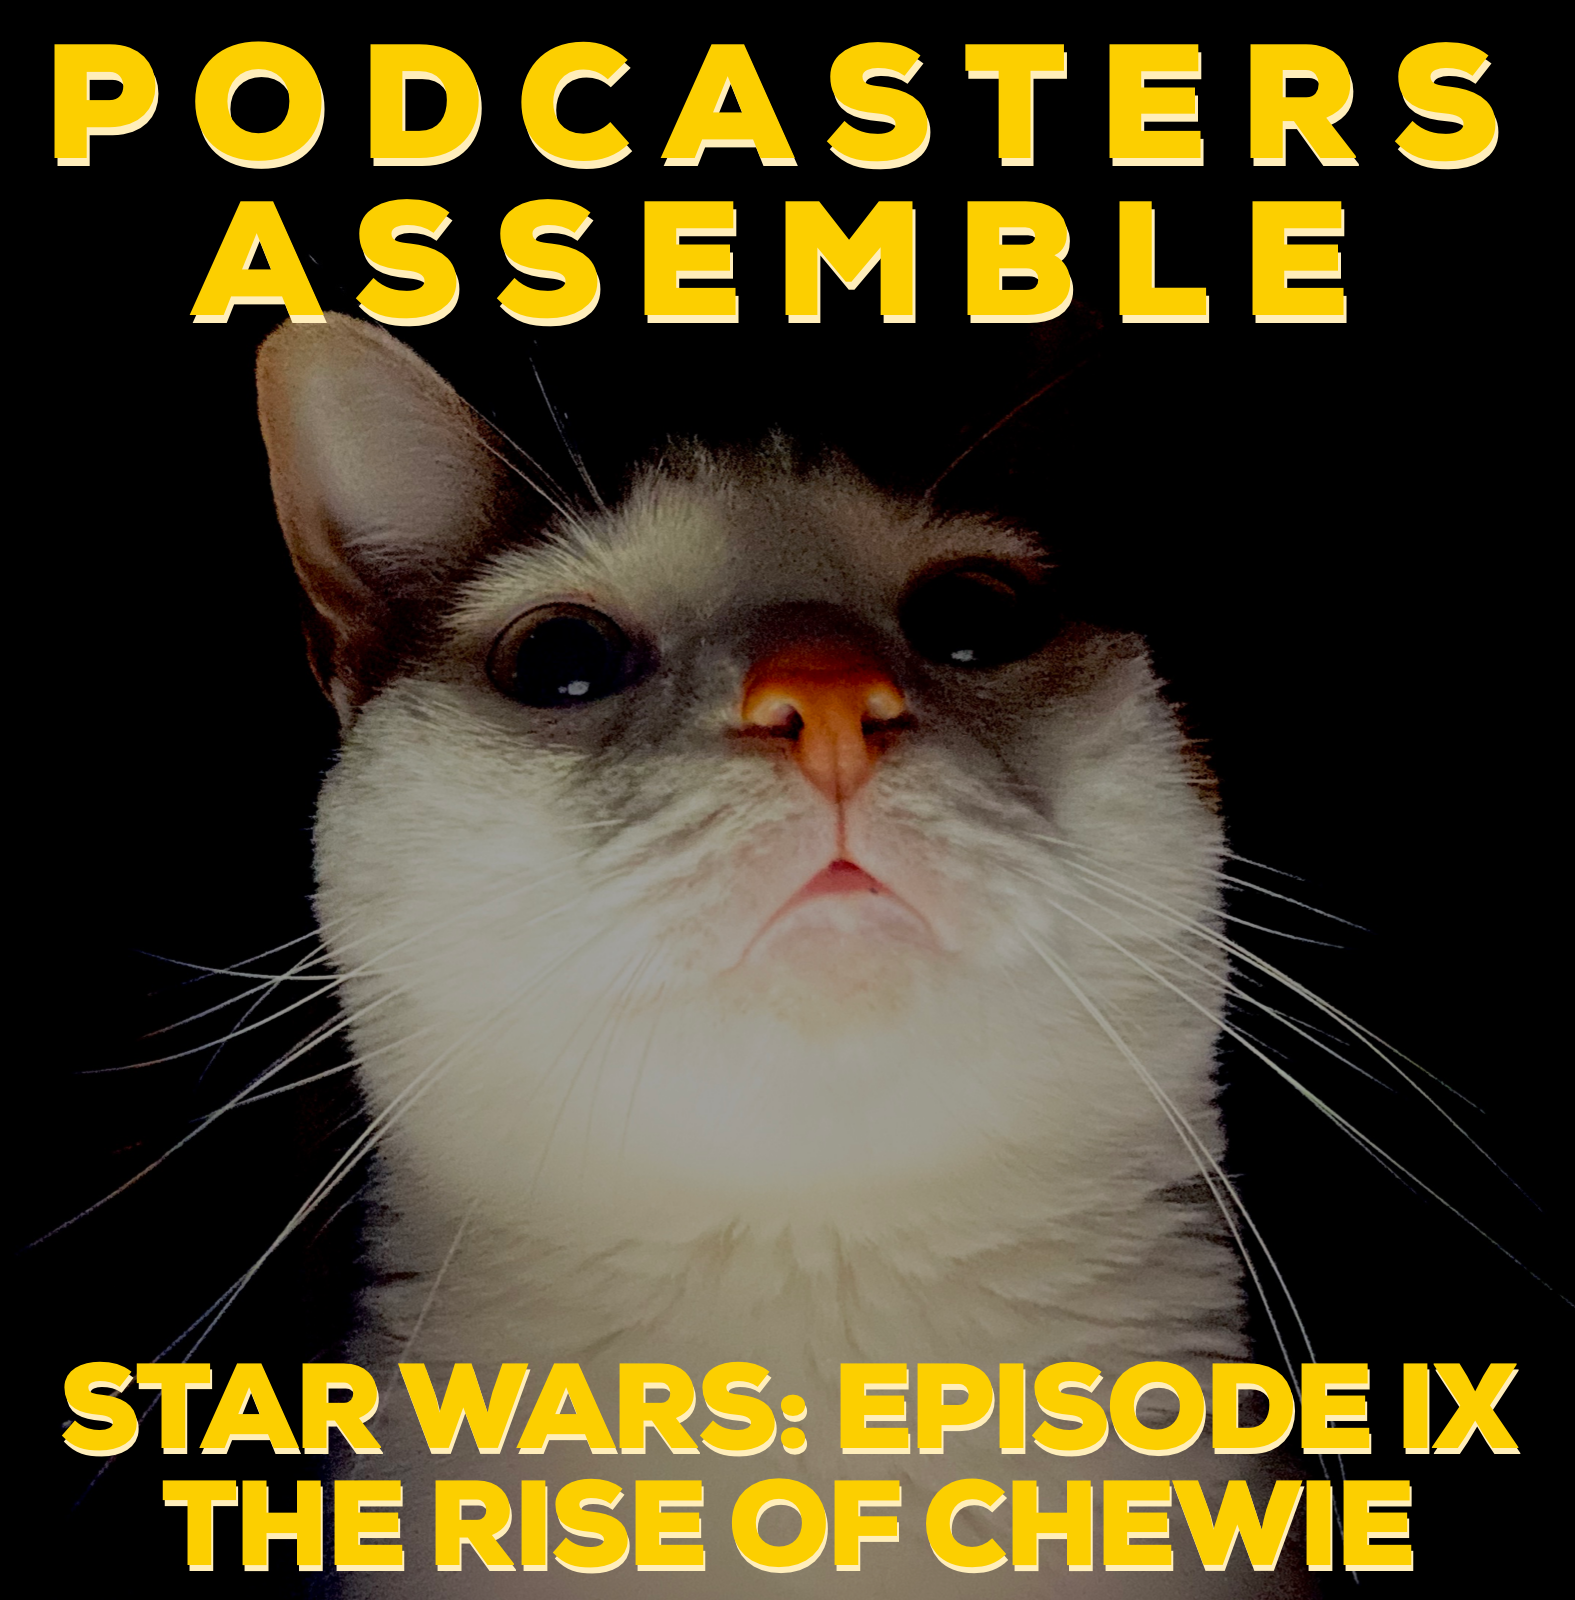 Star Wars: Episode IX - The Rise of Skywalker (Probably)